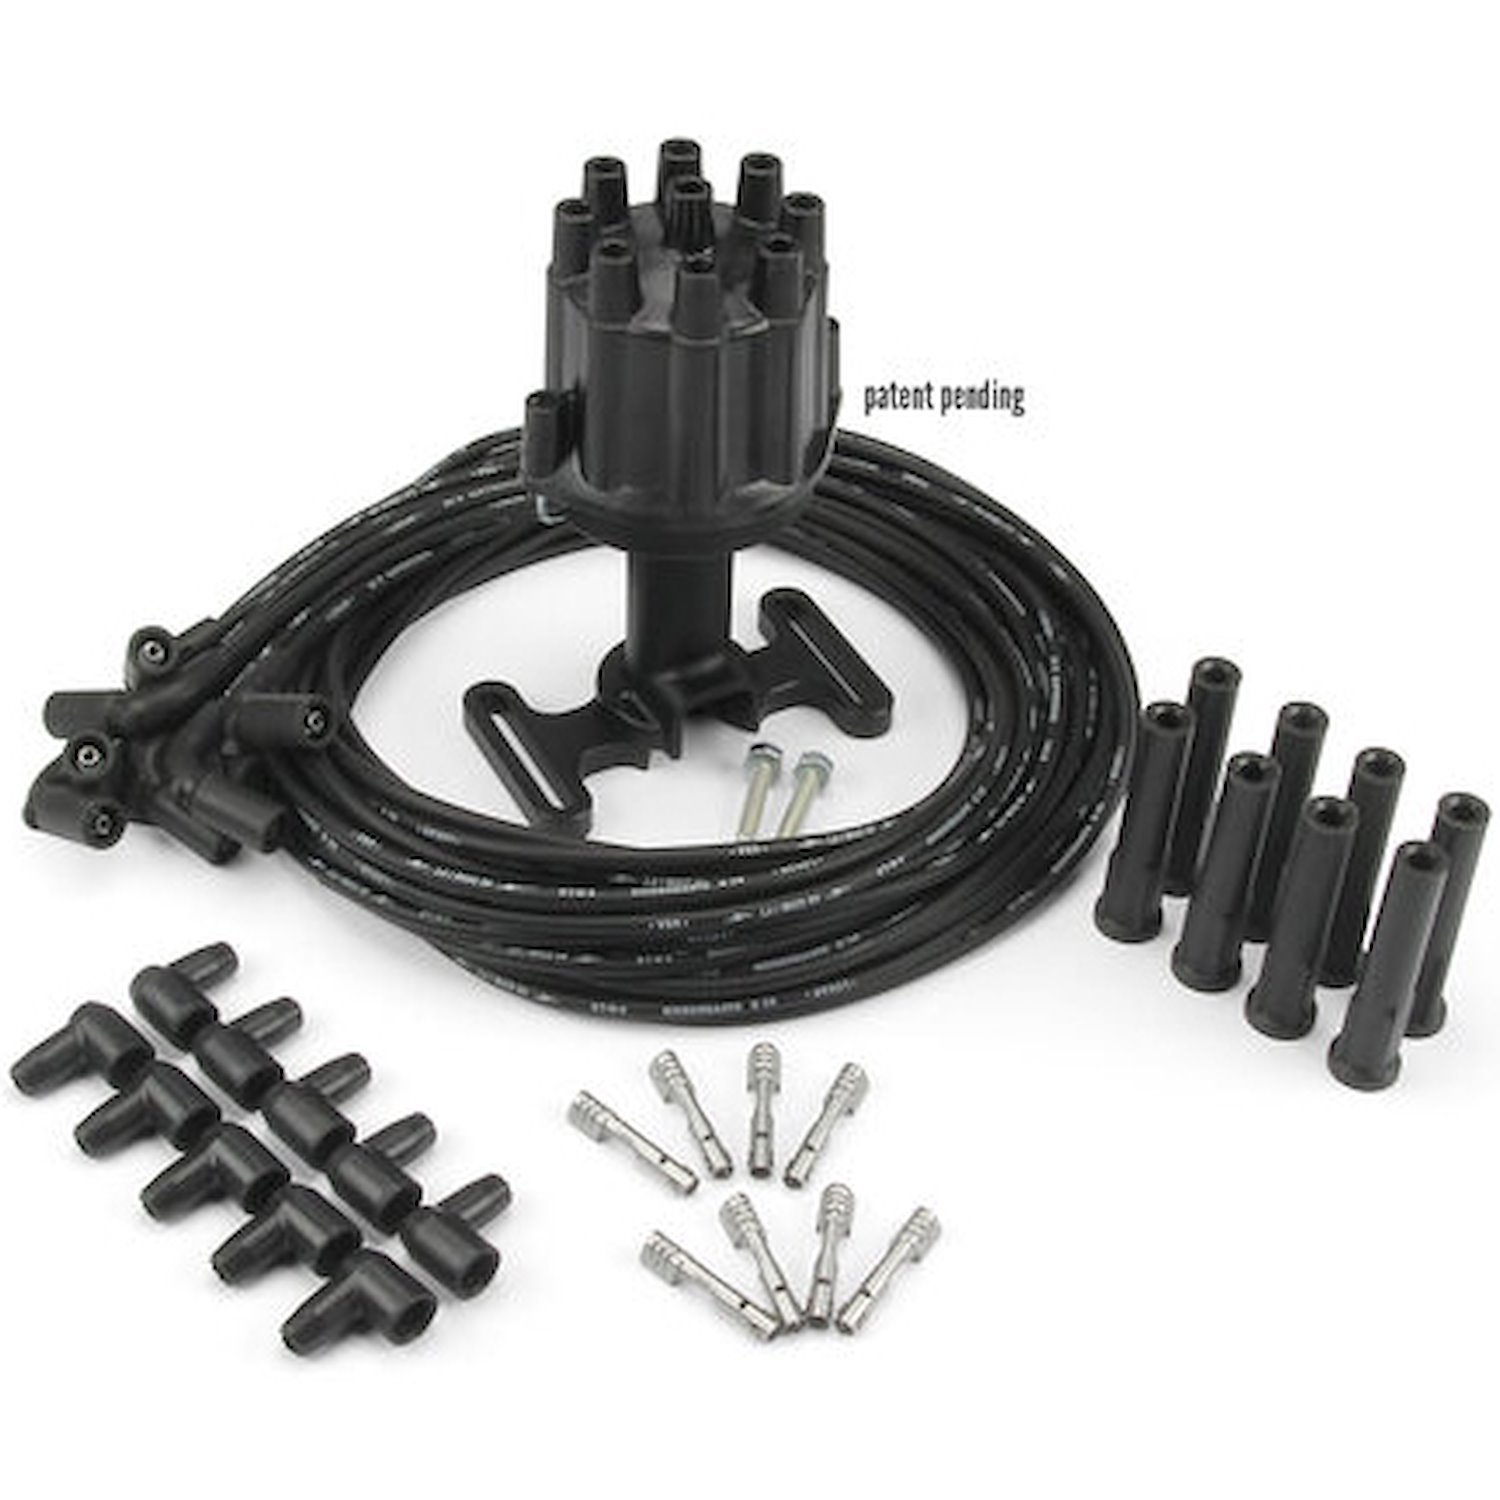 GM Style GM LS Distributor and Plug Wire Kit